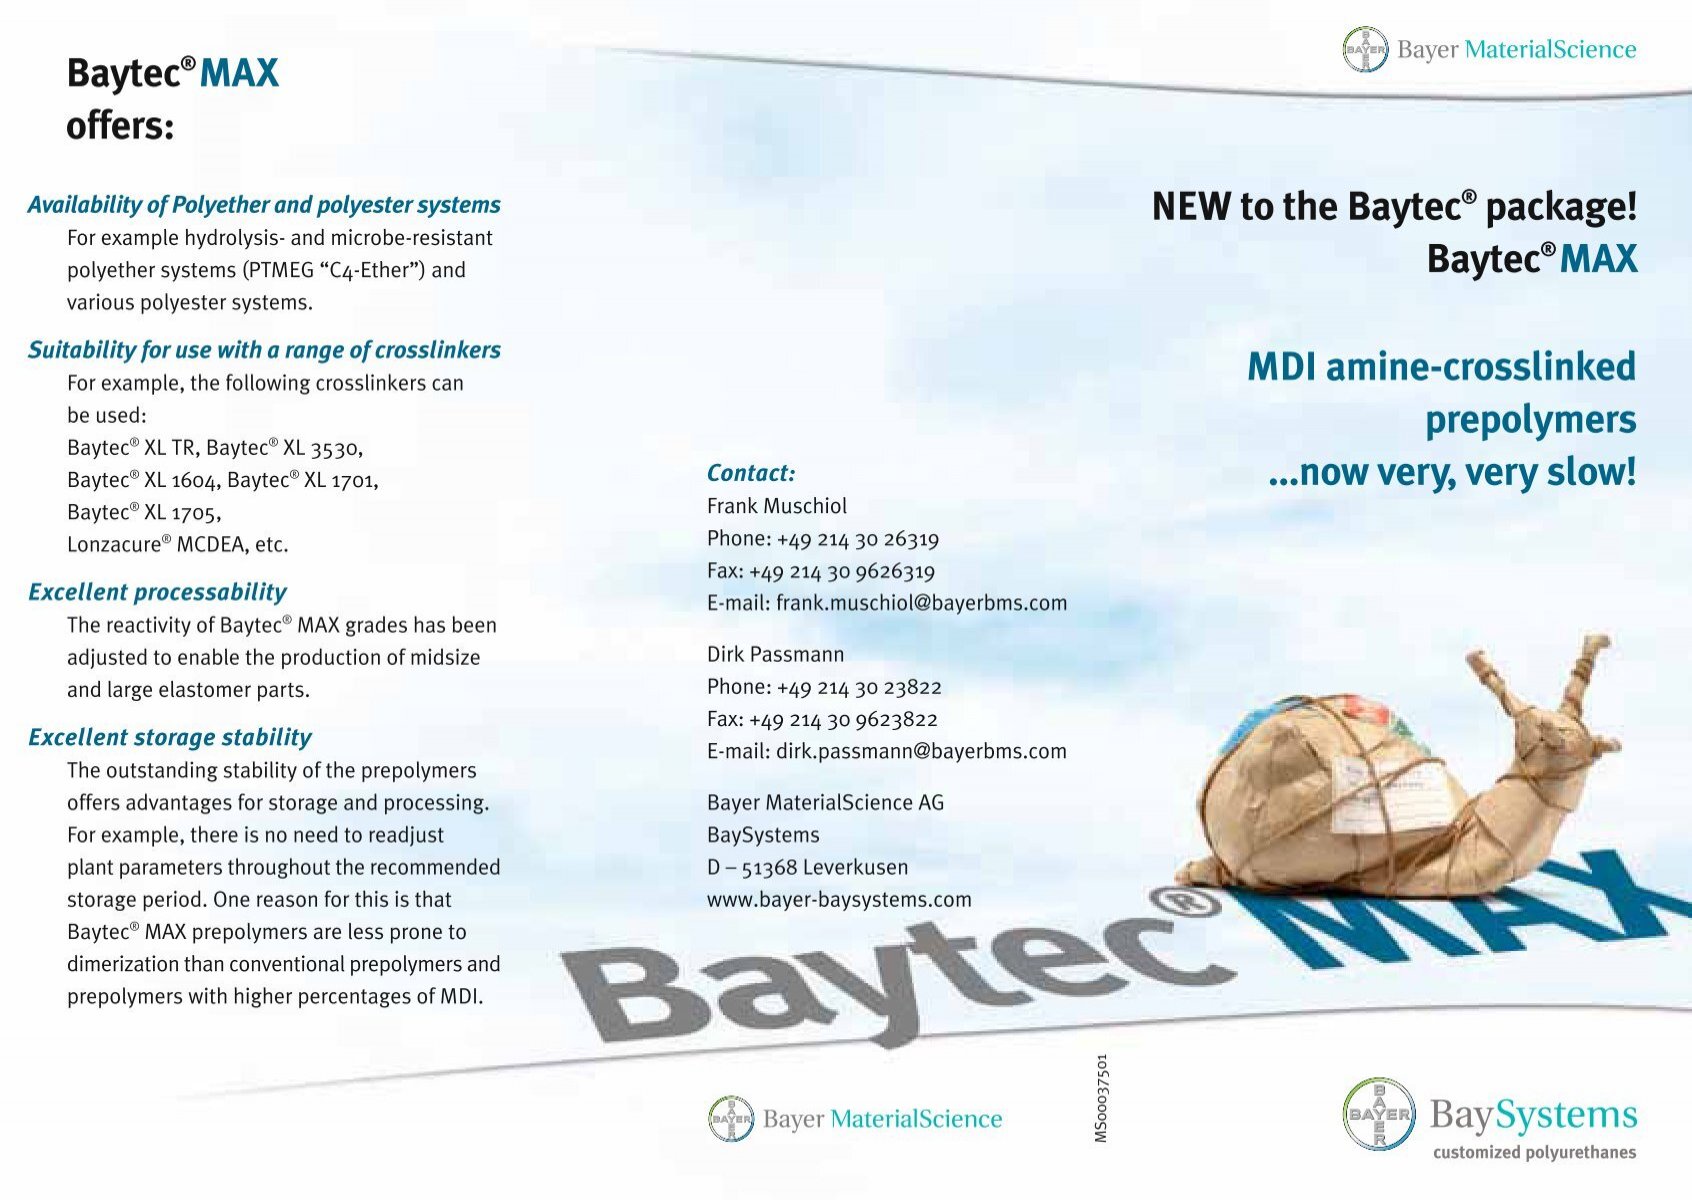 Baytec Max Baysystems Customized Polyurethanes Bayer